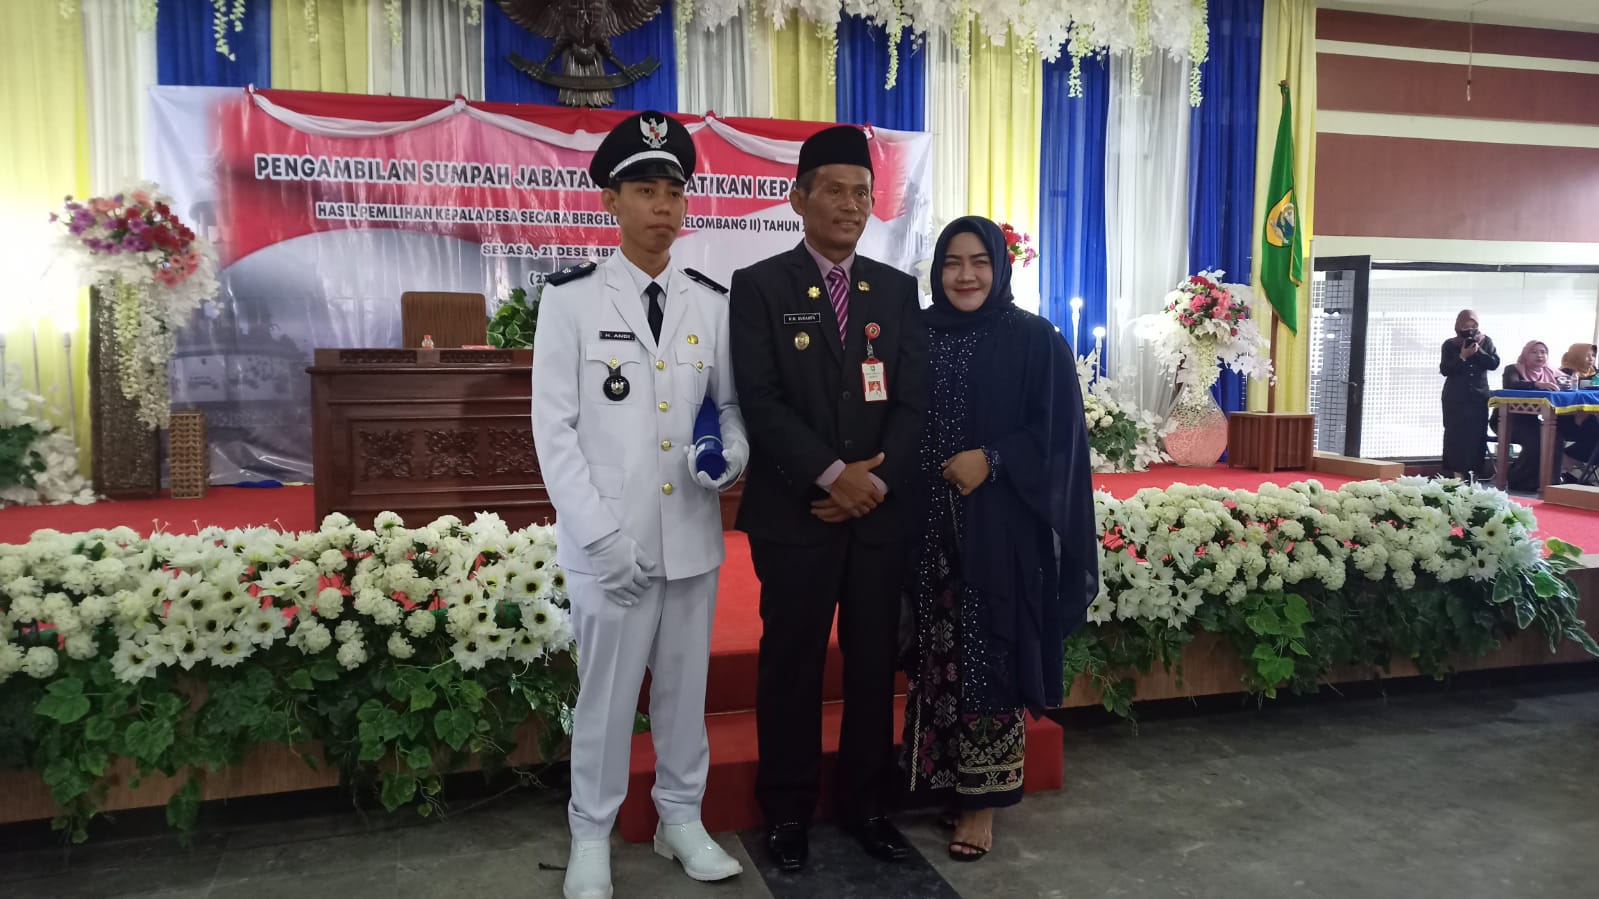 H. Andi, yang baru saja dilantik menjadi kepala Desa Ujung Kecamatan Bati - Bati , Kabupaten Tanah Laut